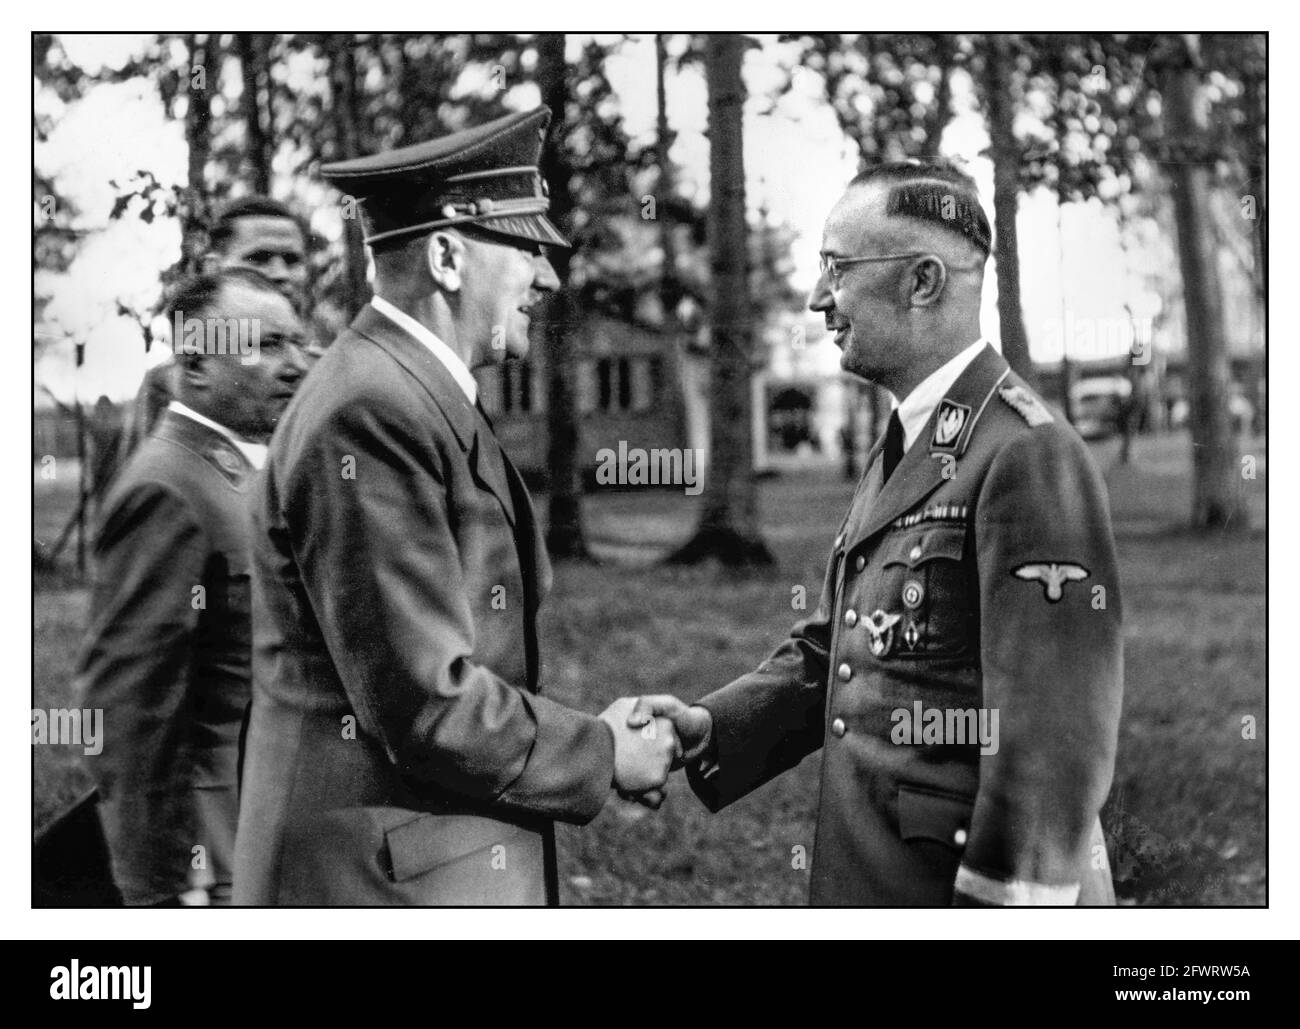 WW2 Adolf Hitler greets Heinrich Himmler and wishes him a happy birthday, 1943. Adolf Hitler with Nazi SS Leader Heinrich Himmler in October 1943 at the Wolfs Lair headquarters 'Wolfsschanze' near Rastenburg in East Prussia. Stock Photo